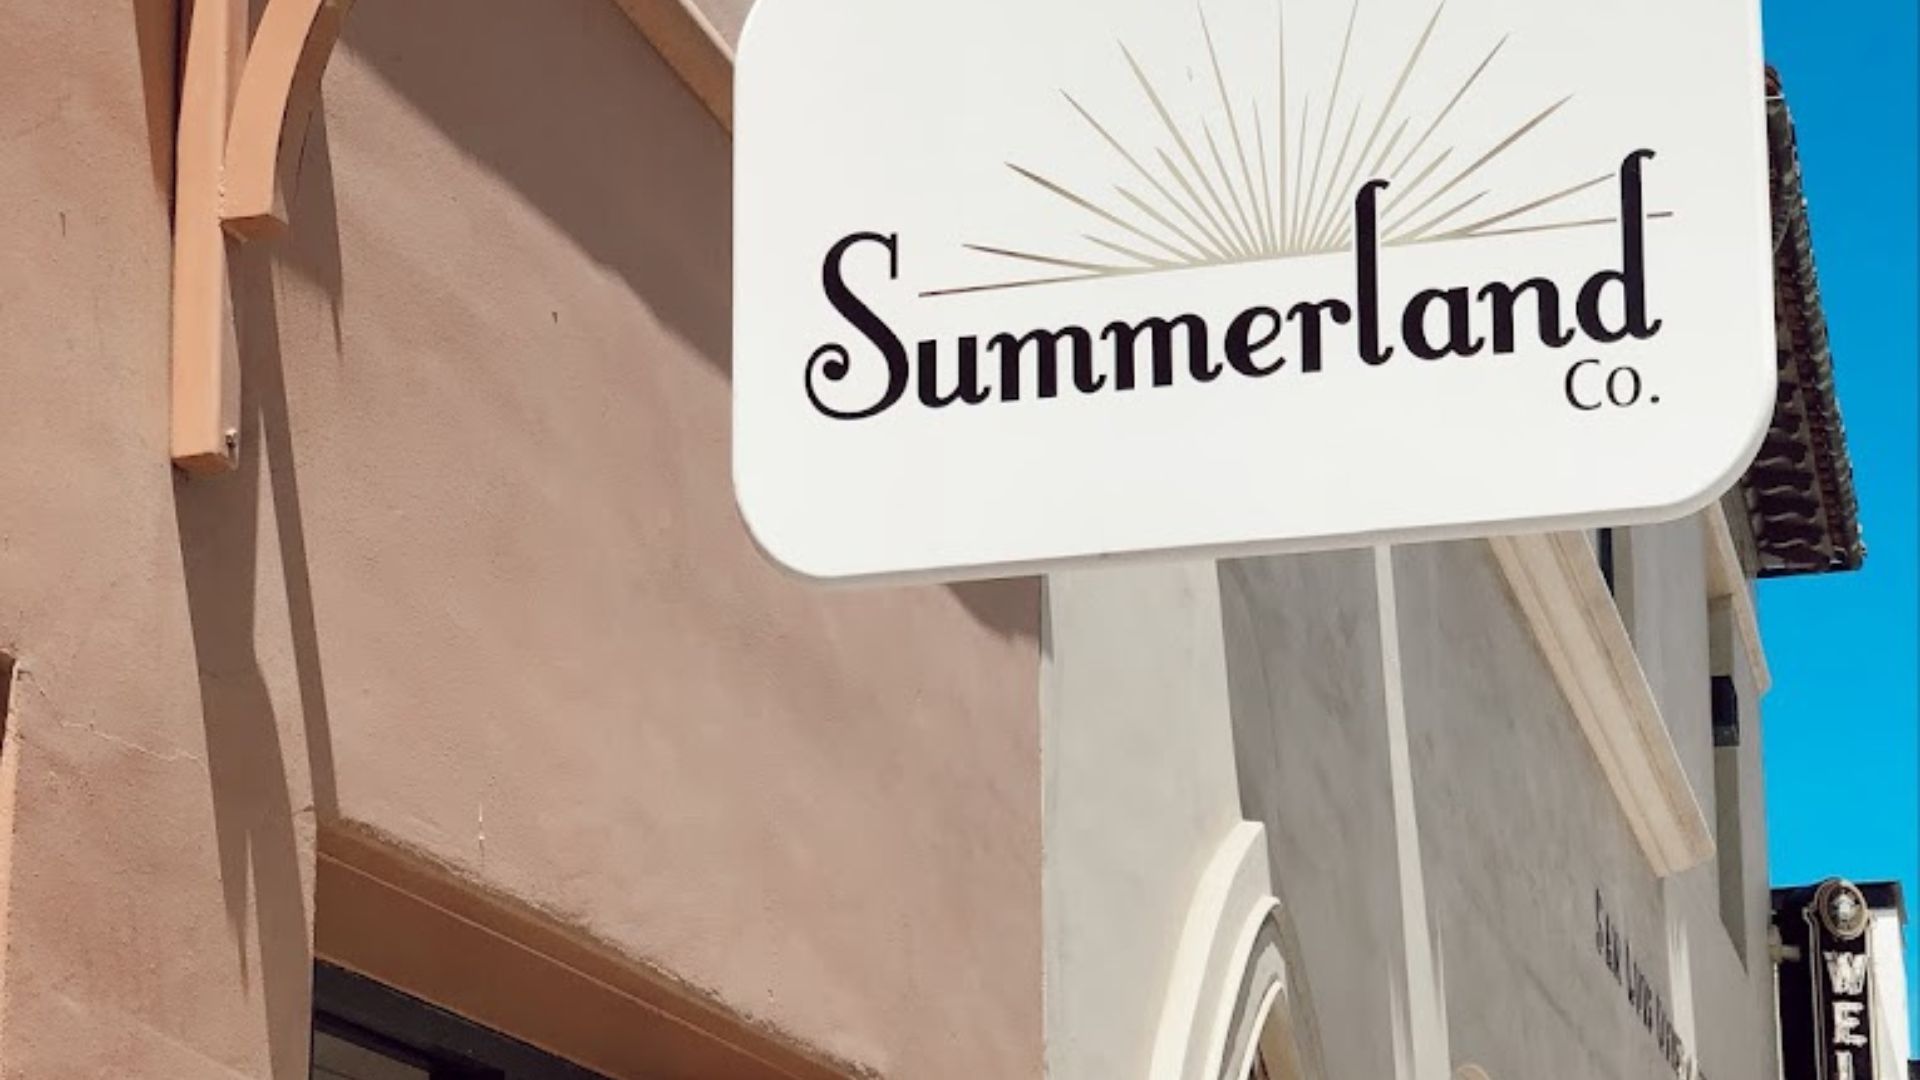 Summerland Co. Image